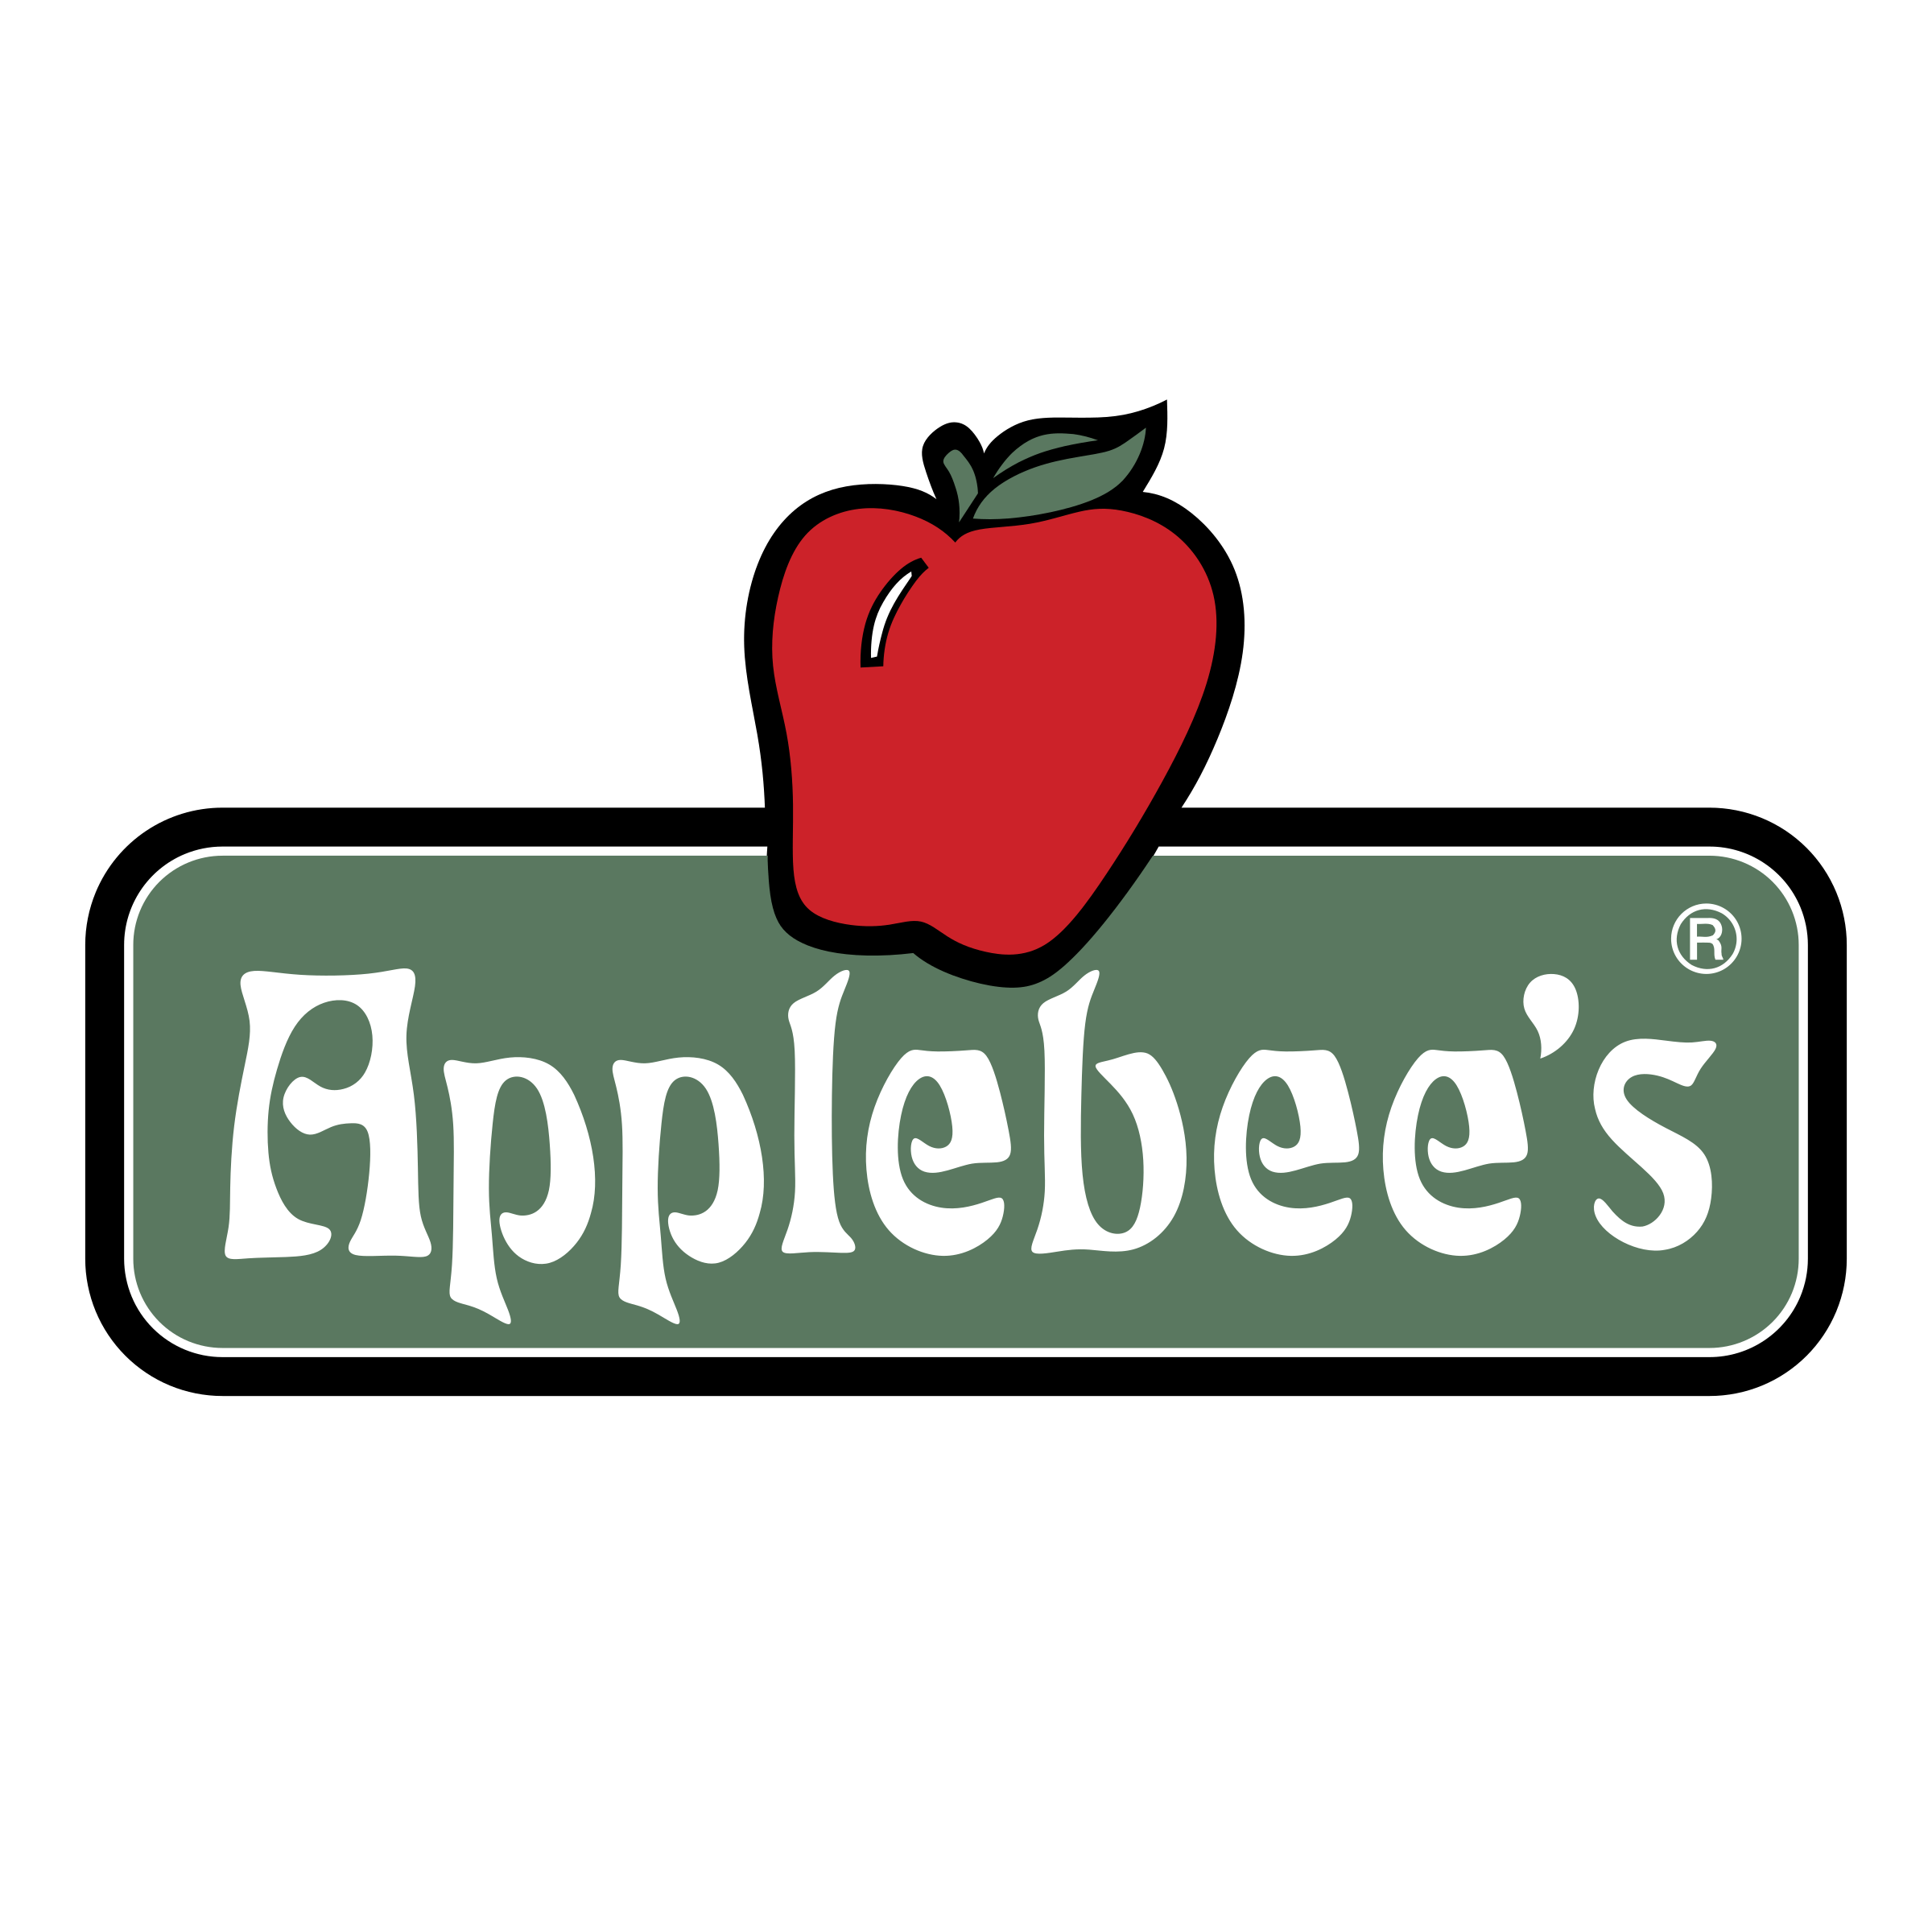 Applebee's Transparent Logo - Applebee's Logo PNG Transparent & SVG Vector